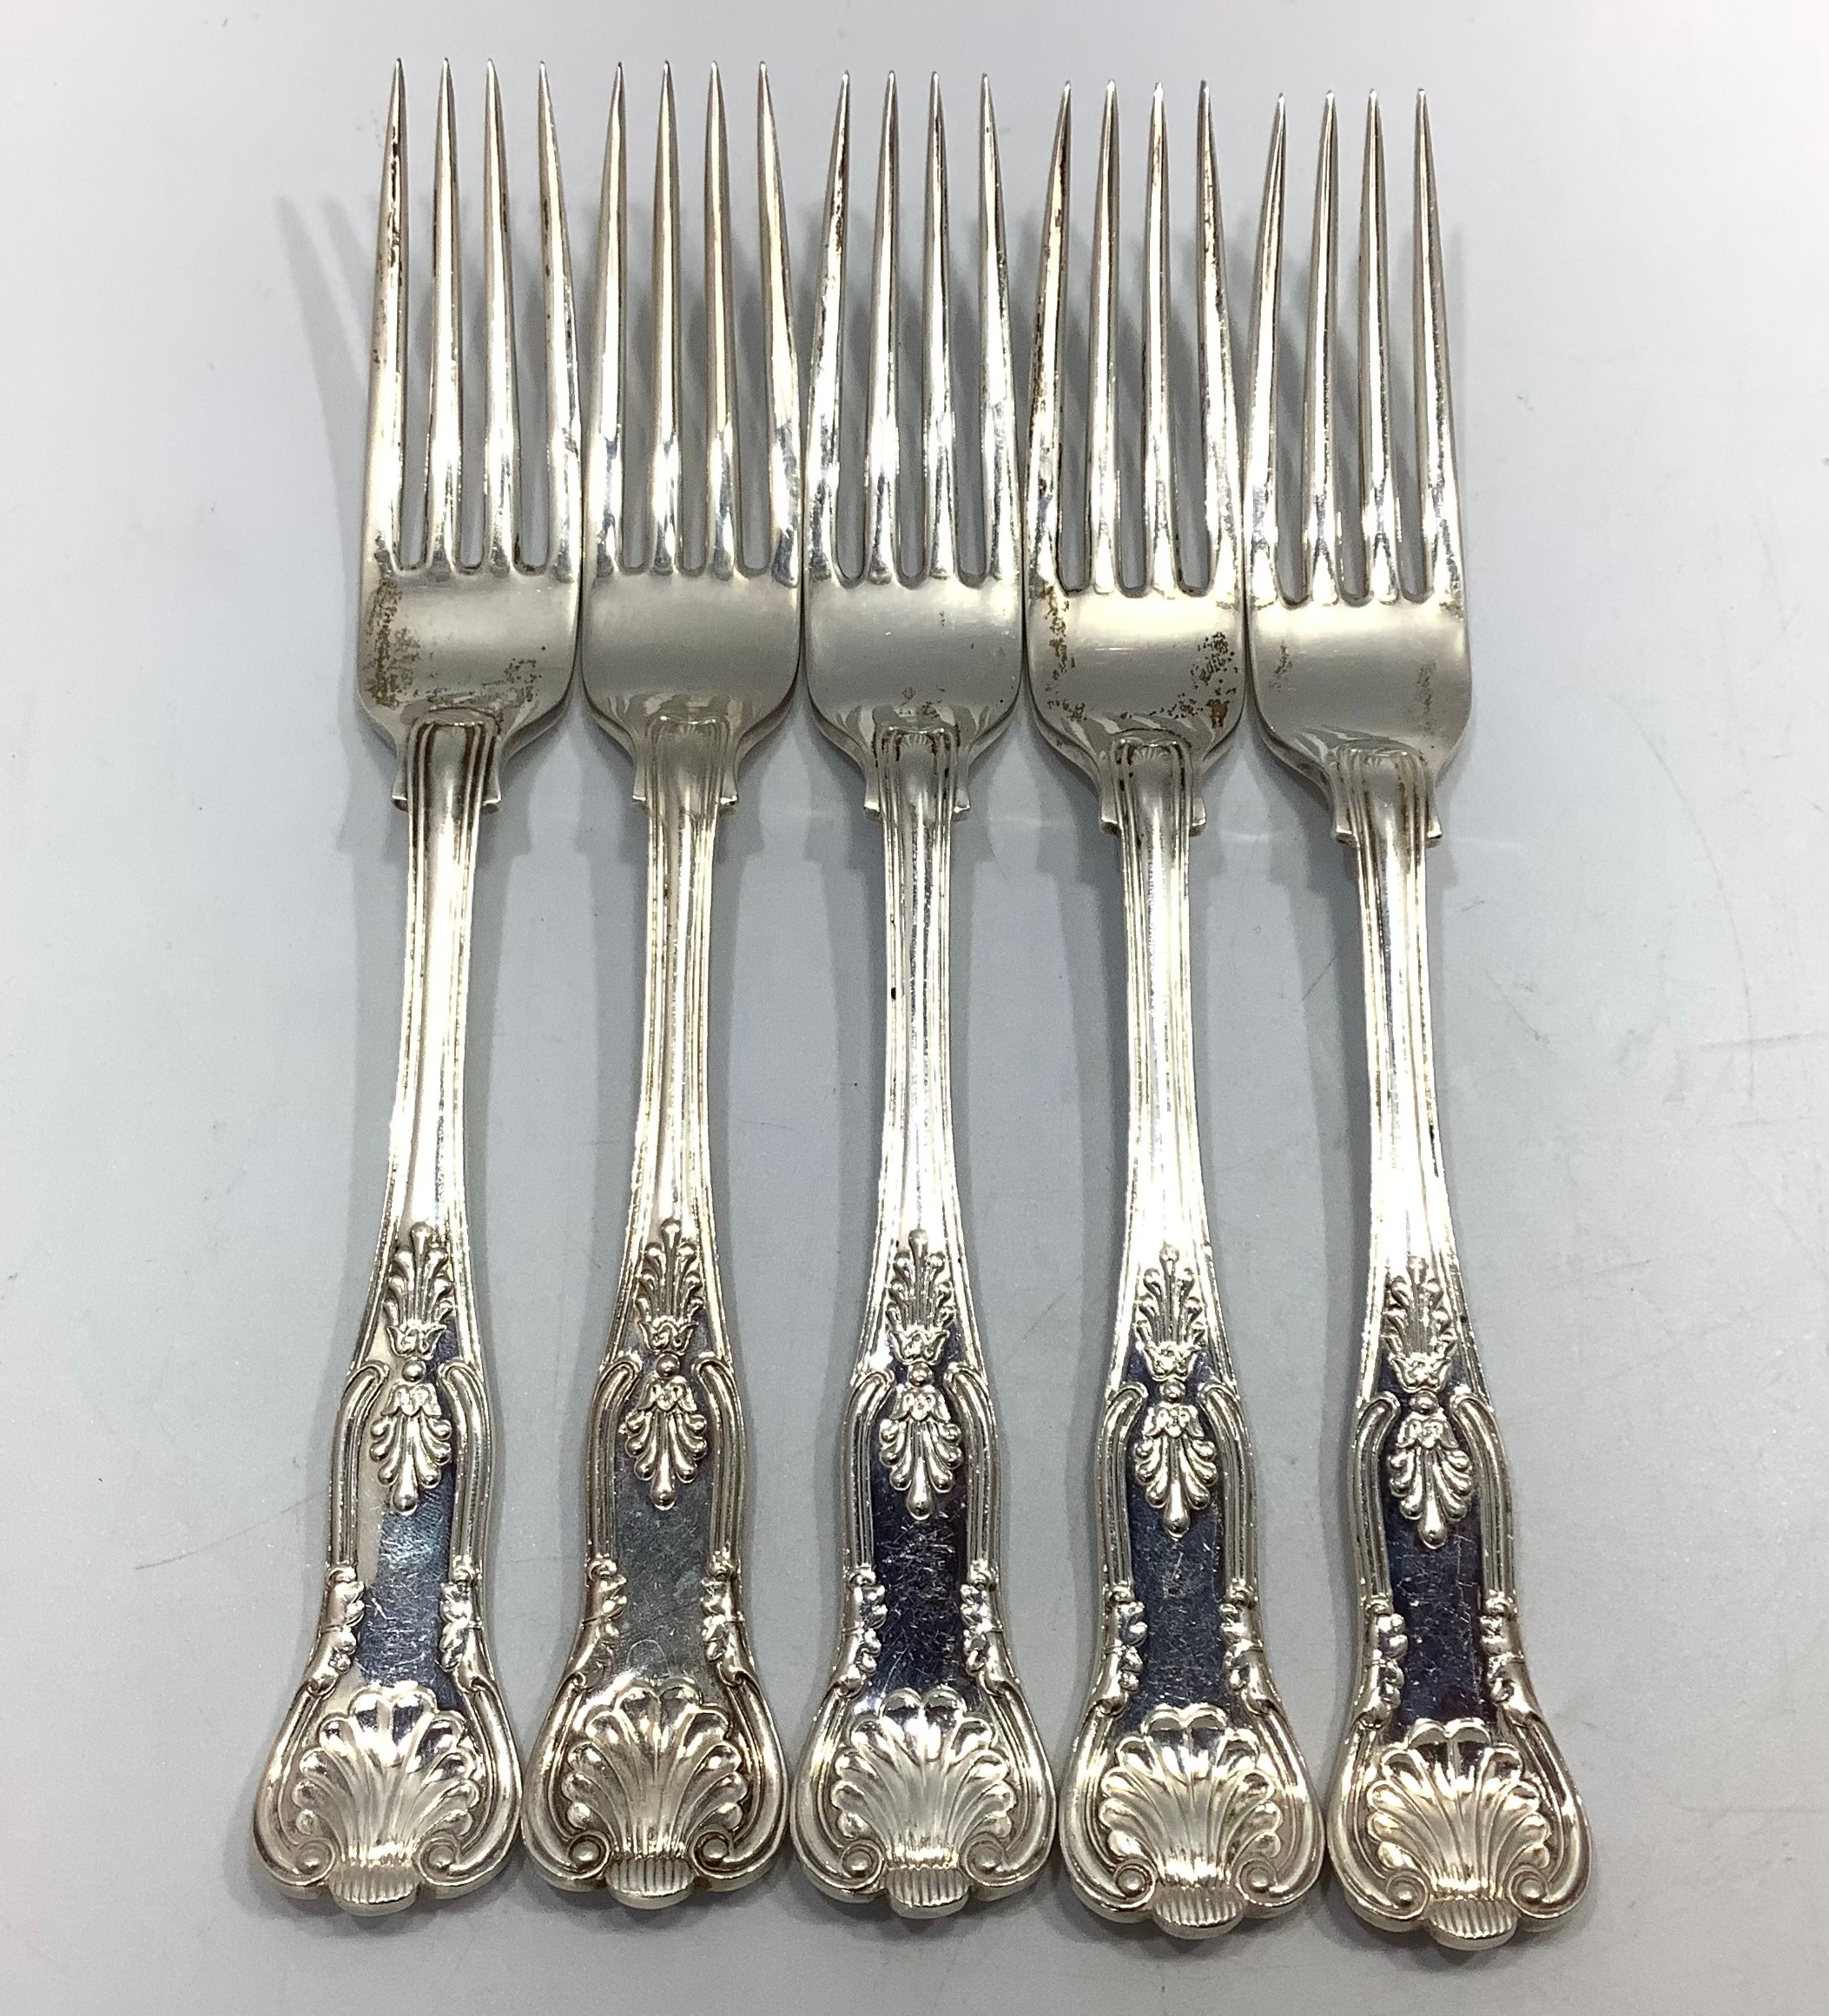 Five large Queens pattern silver forks, Sheffield, 1937, maker's mark of Walker & Hall, 17.26 ozt